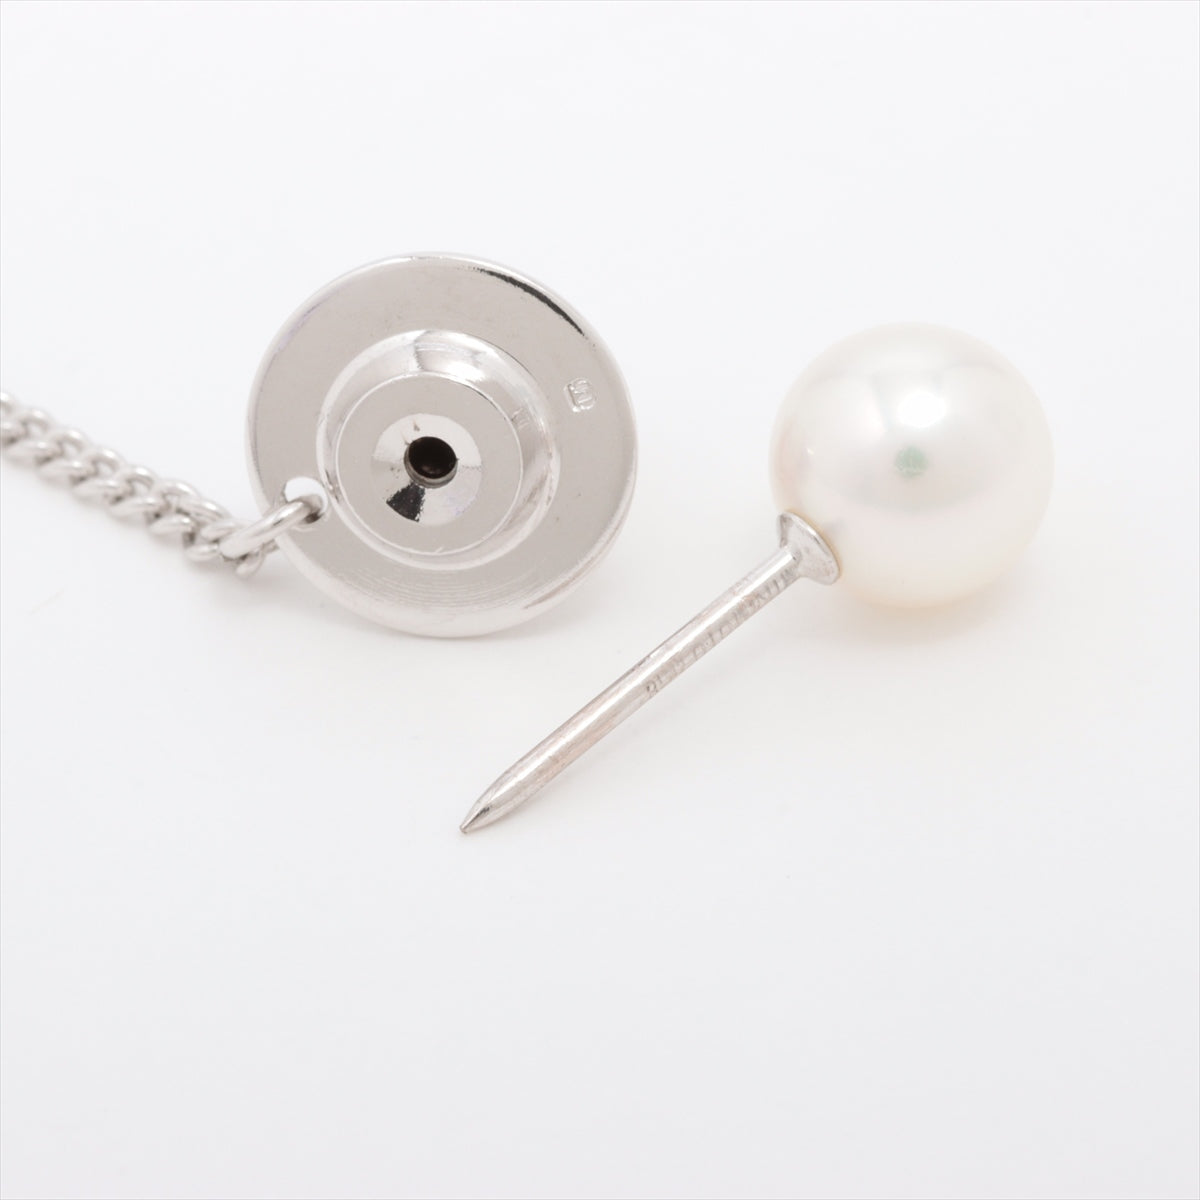 Mikimoto Pearl Tie tack K18(WG) 0.7g Approx. 7.0 mm